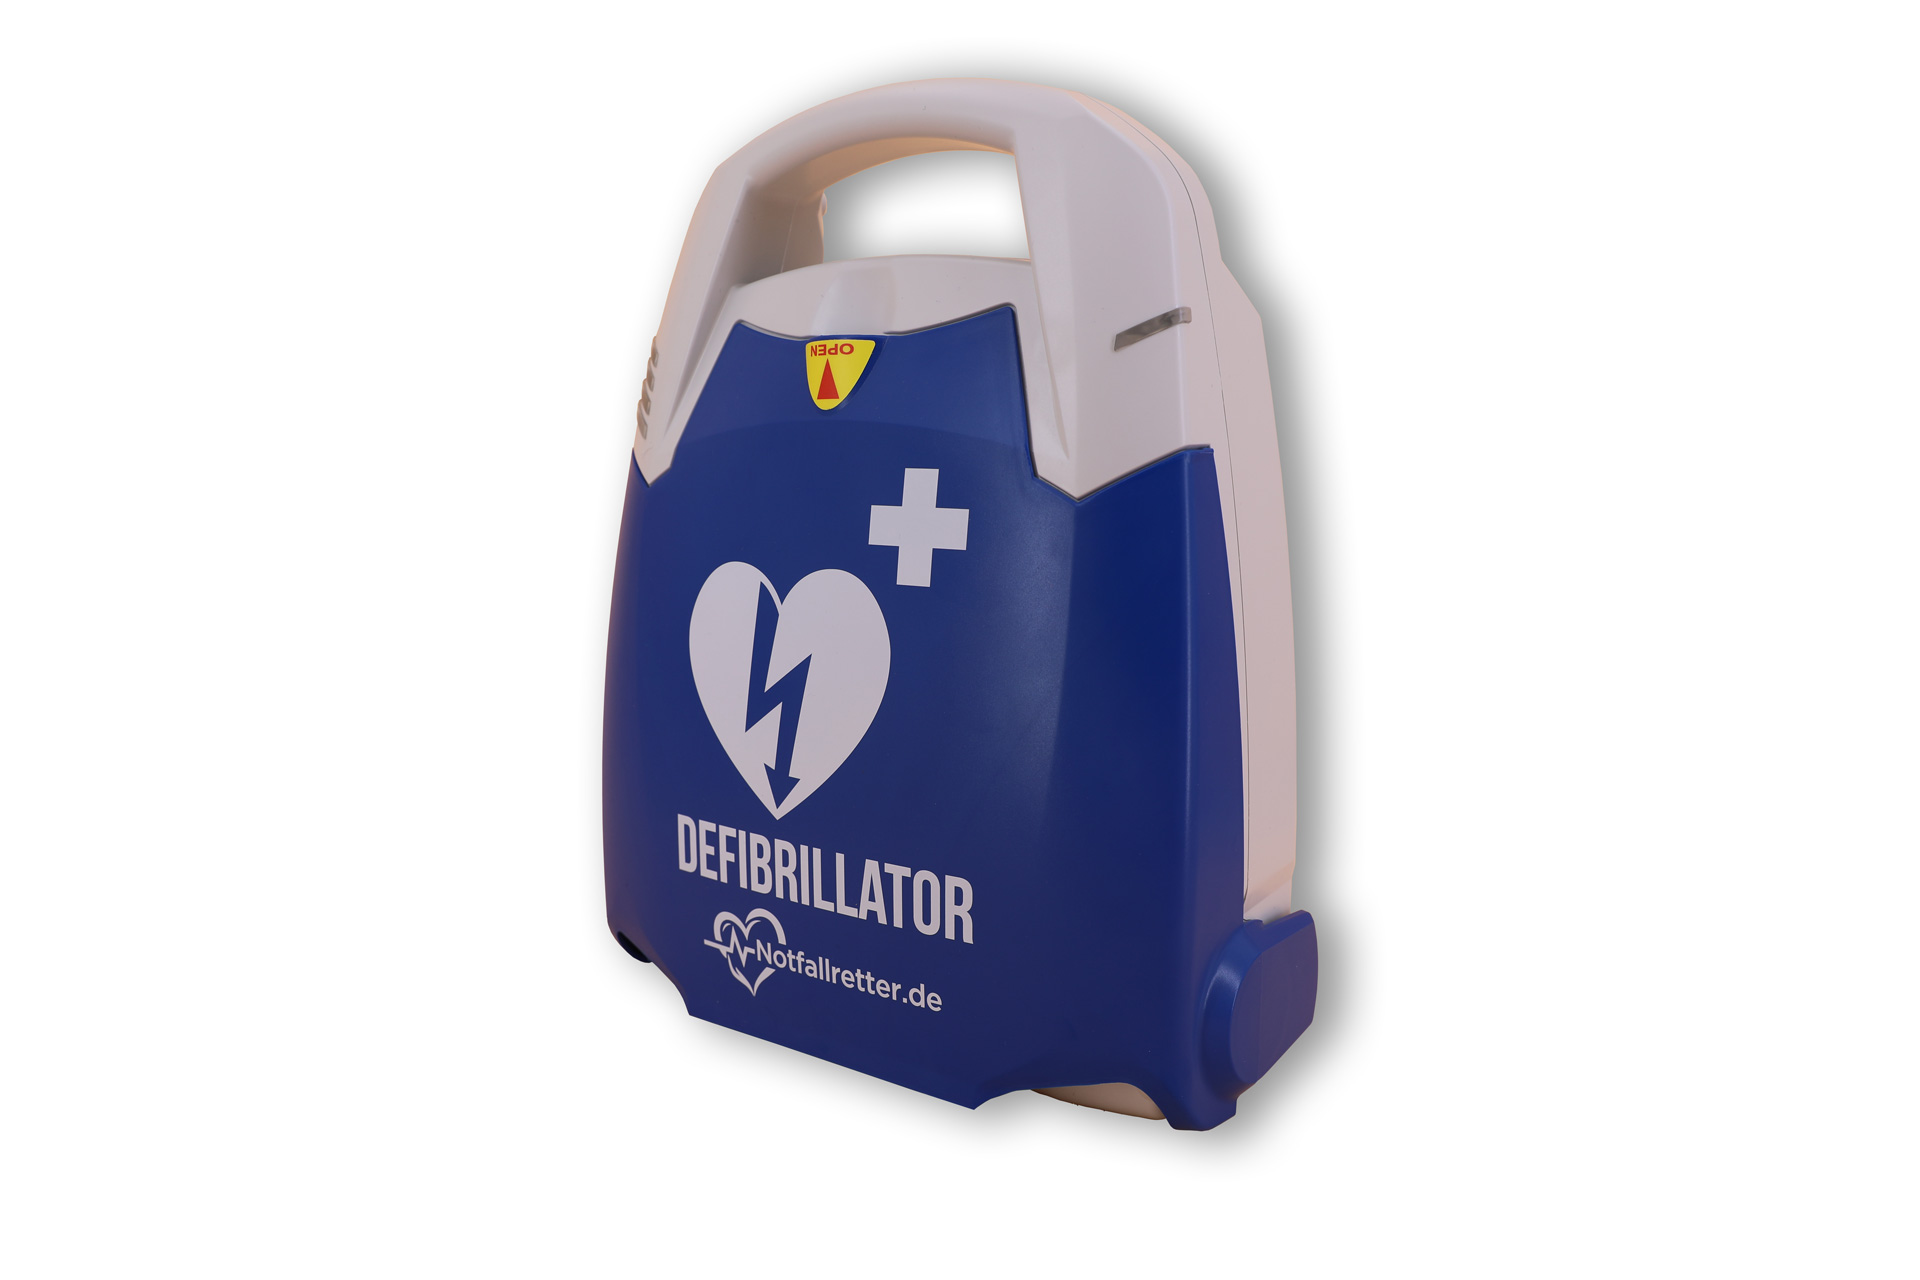 Notfallretter.de® Basic AED - recchte Seite